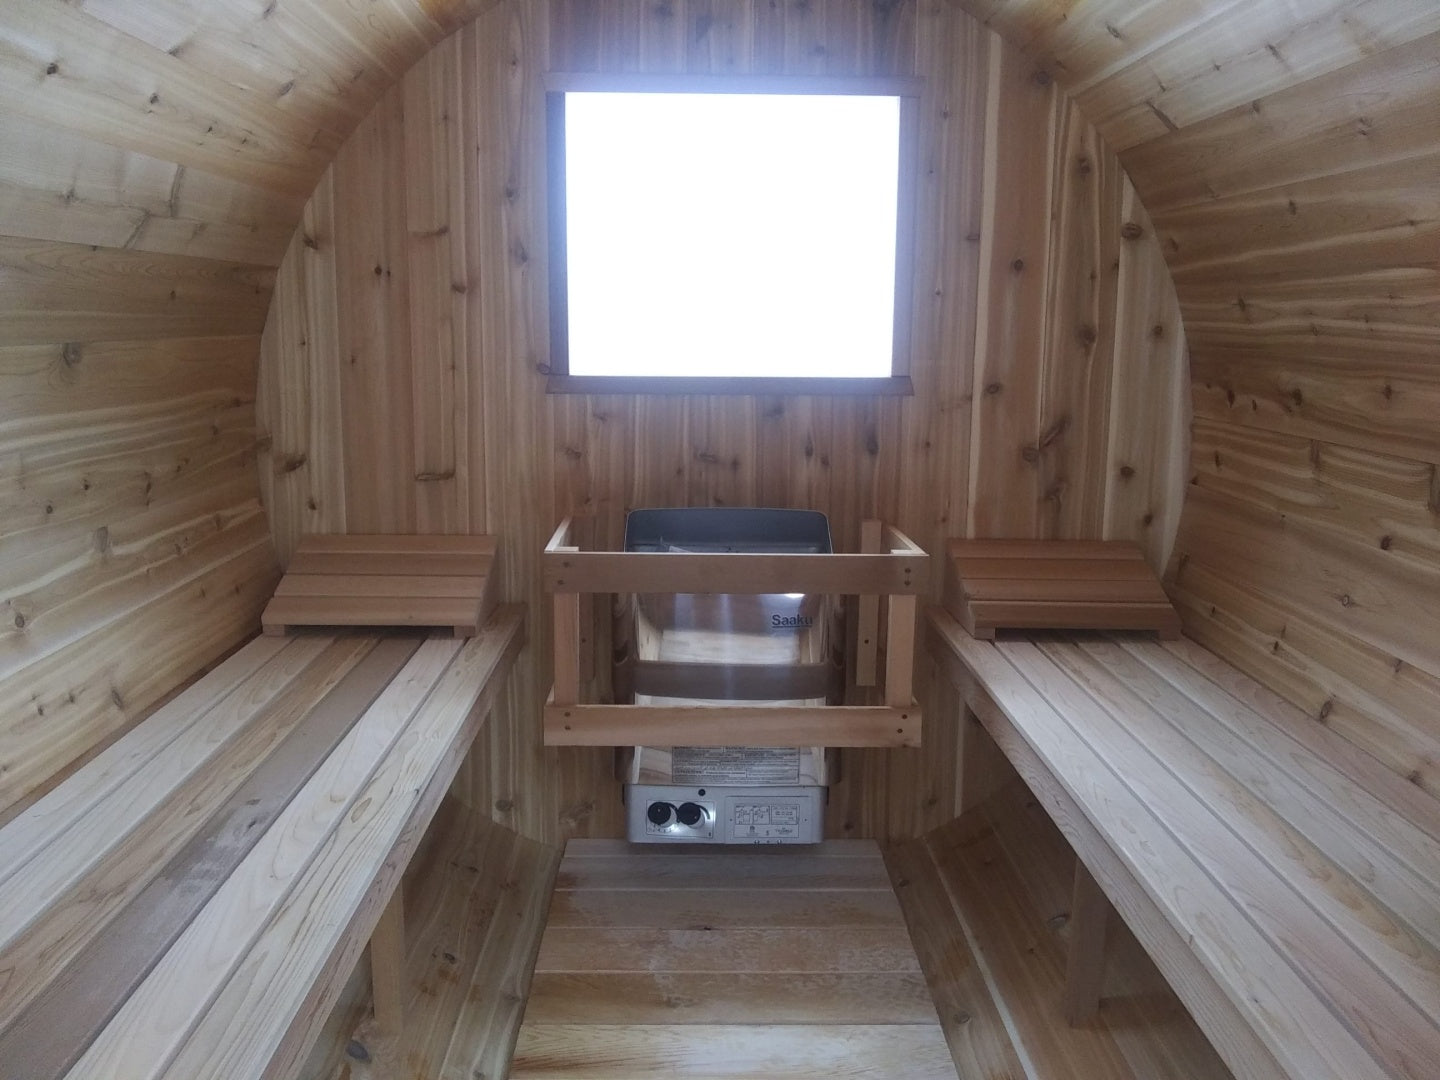 Knotty Cedar Barrel Sauna with back window and Electric heater